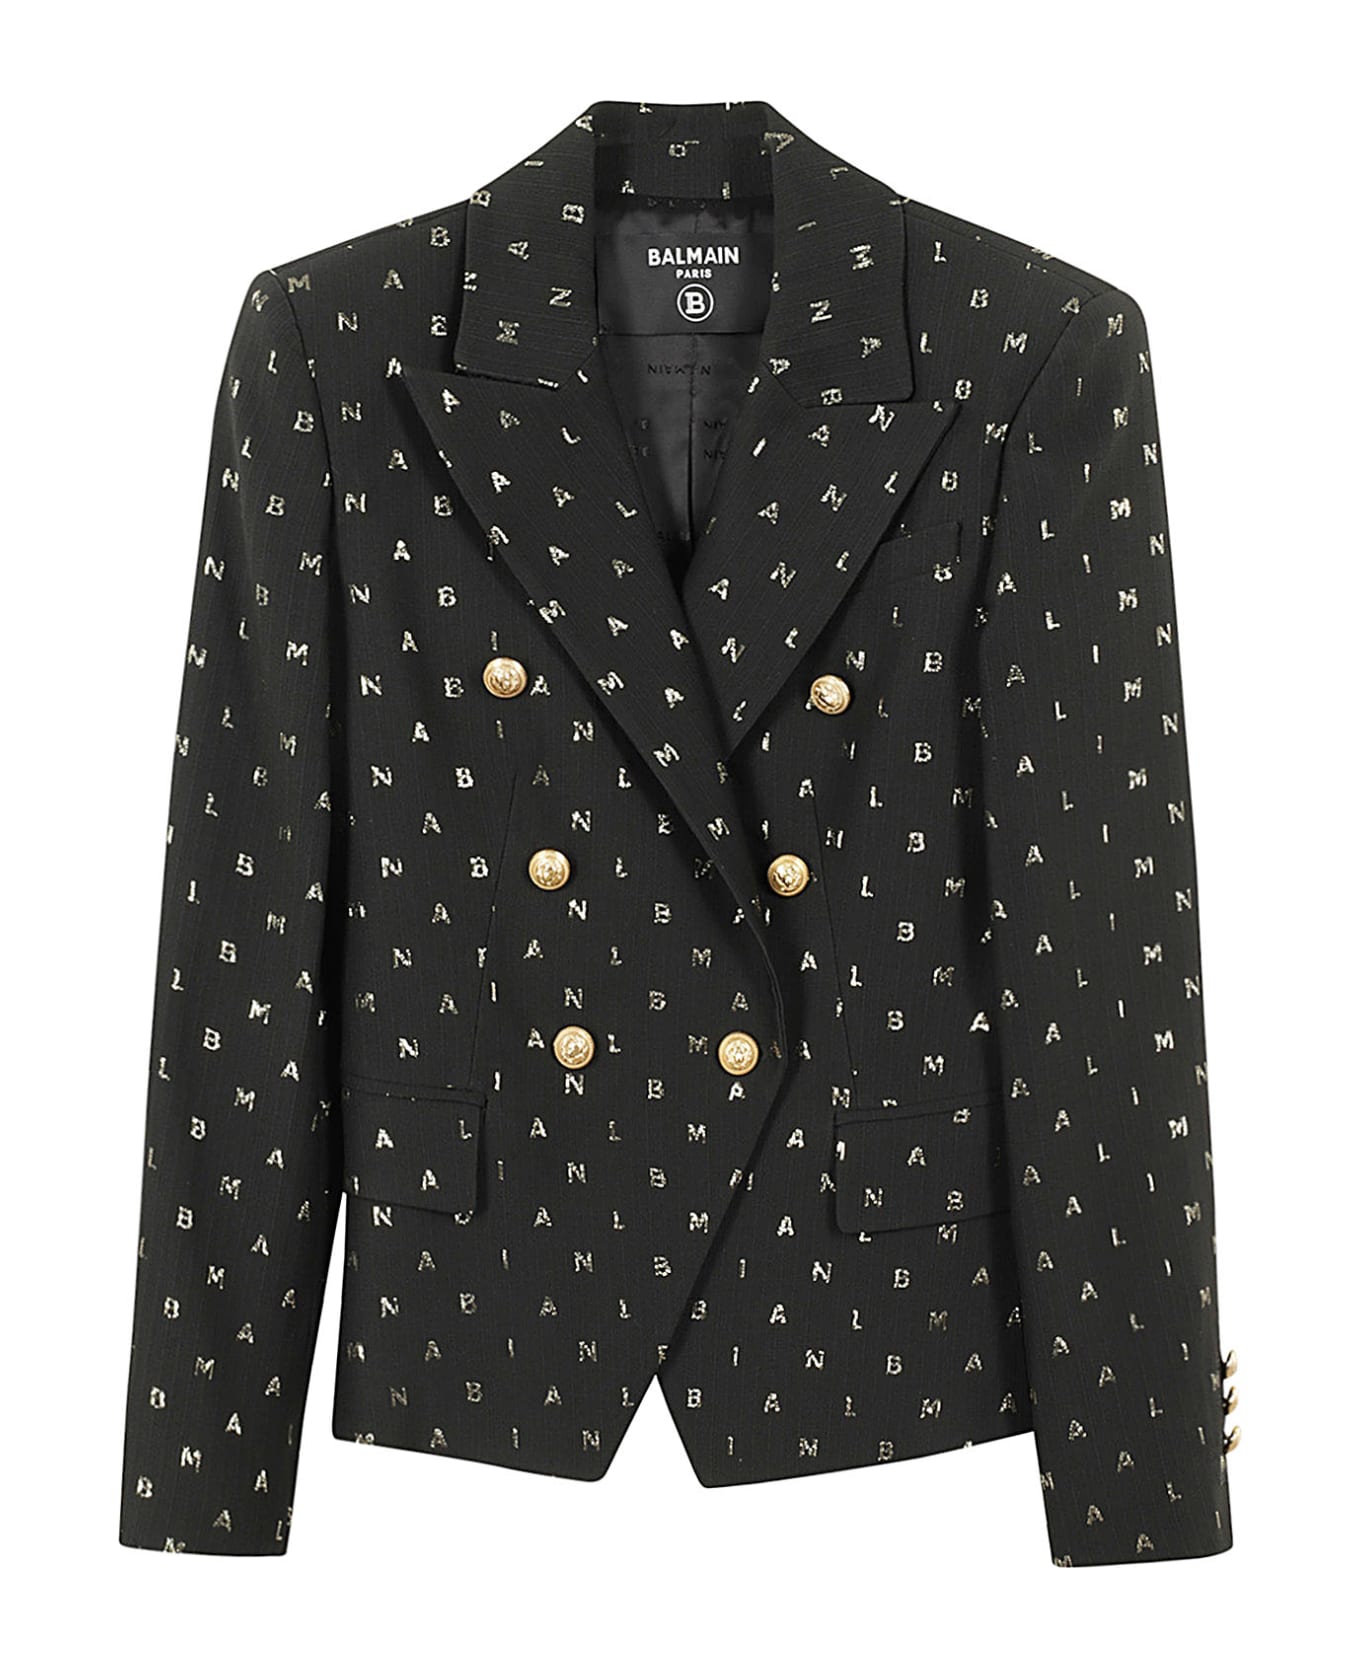 Balmain Suit Jacket - Or Black Gold